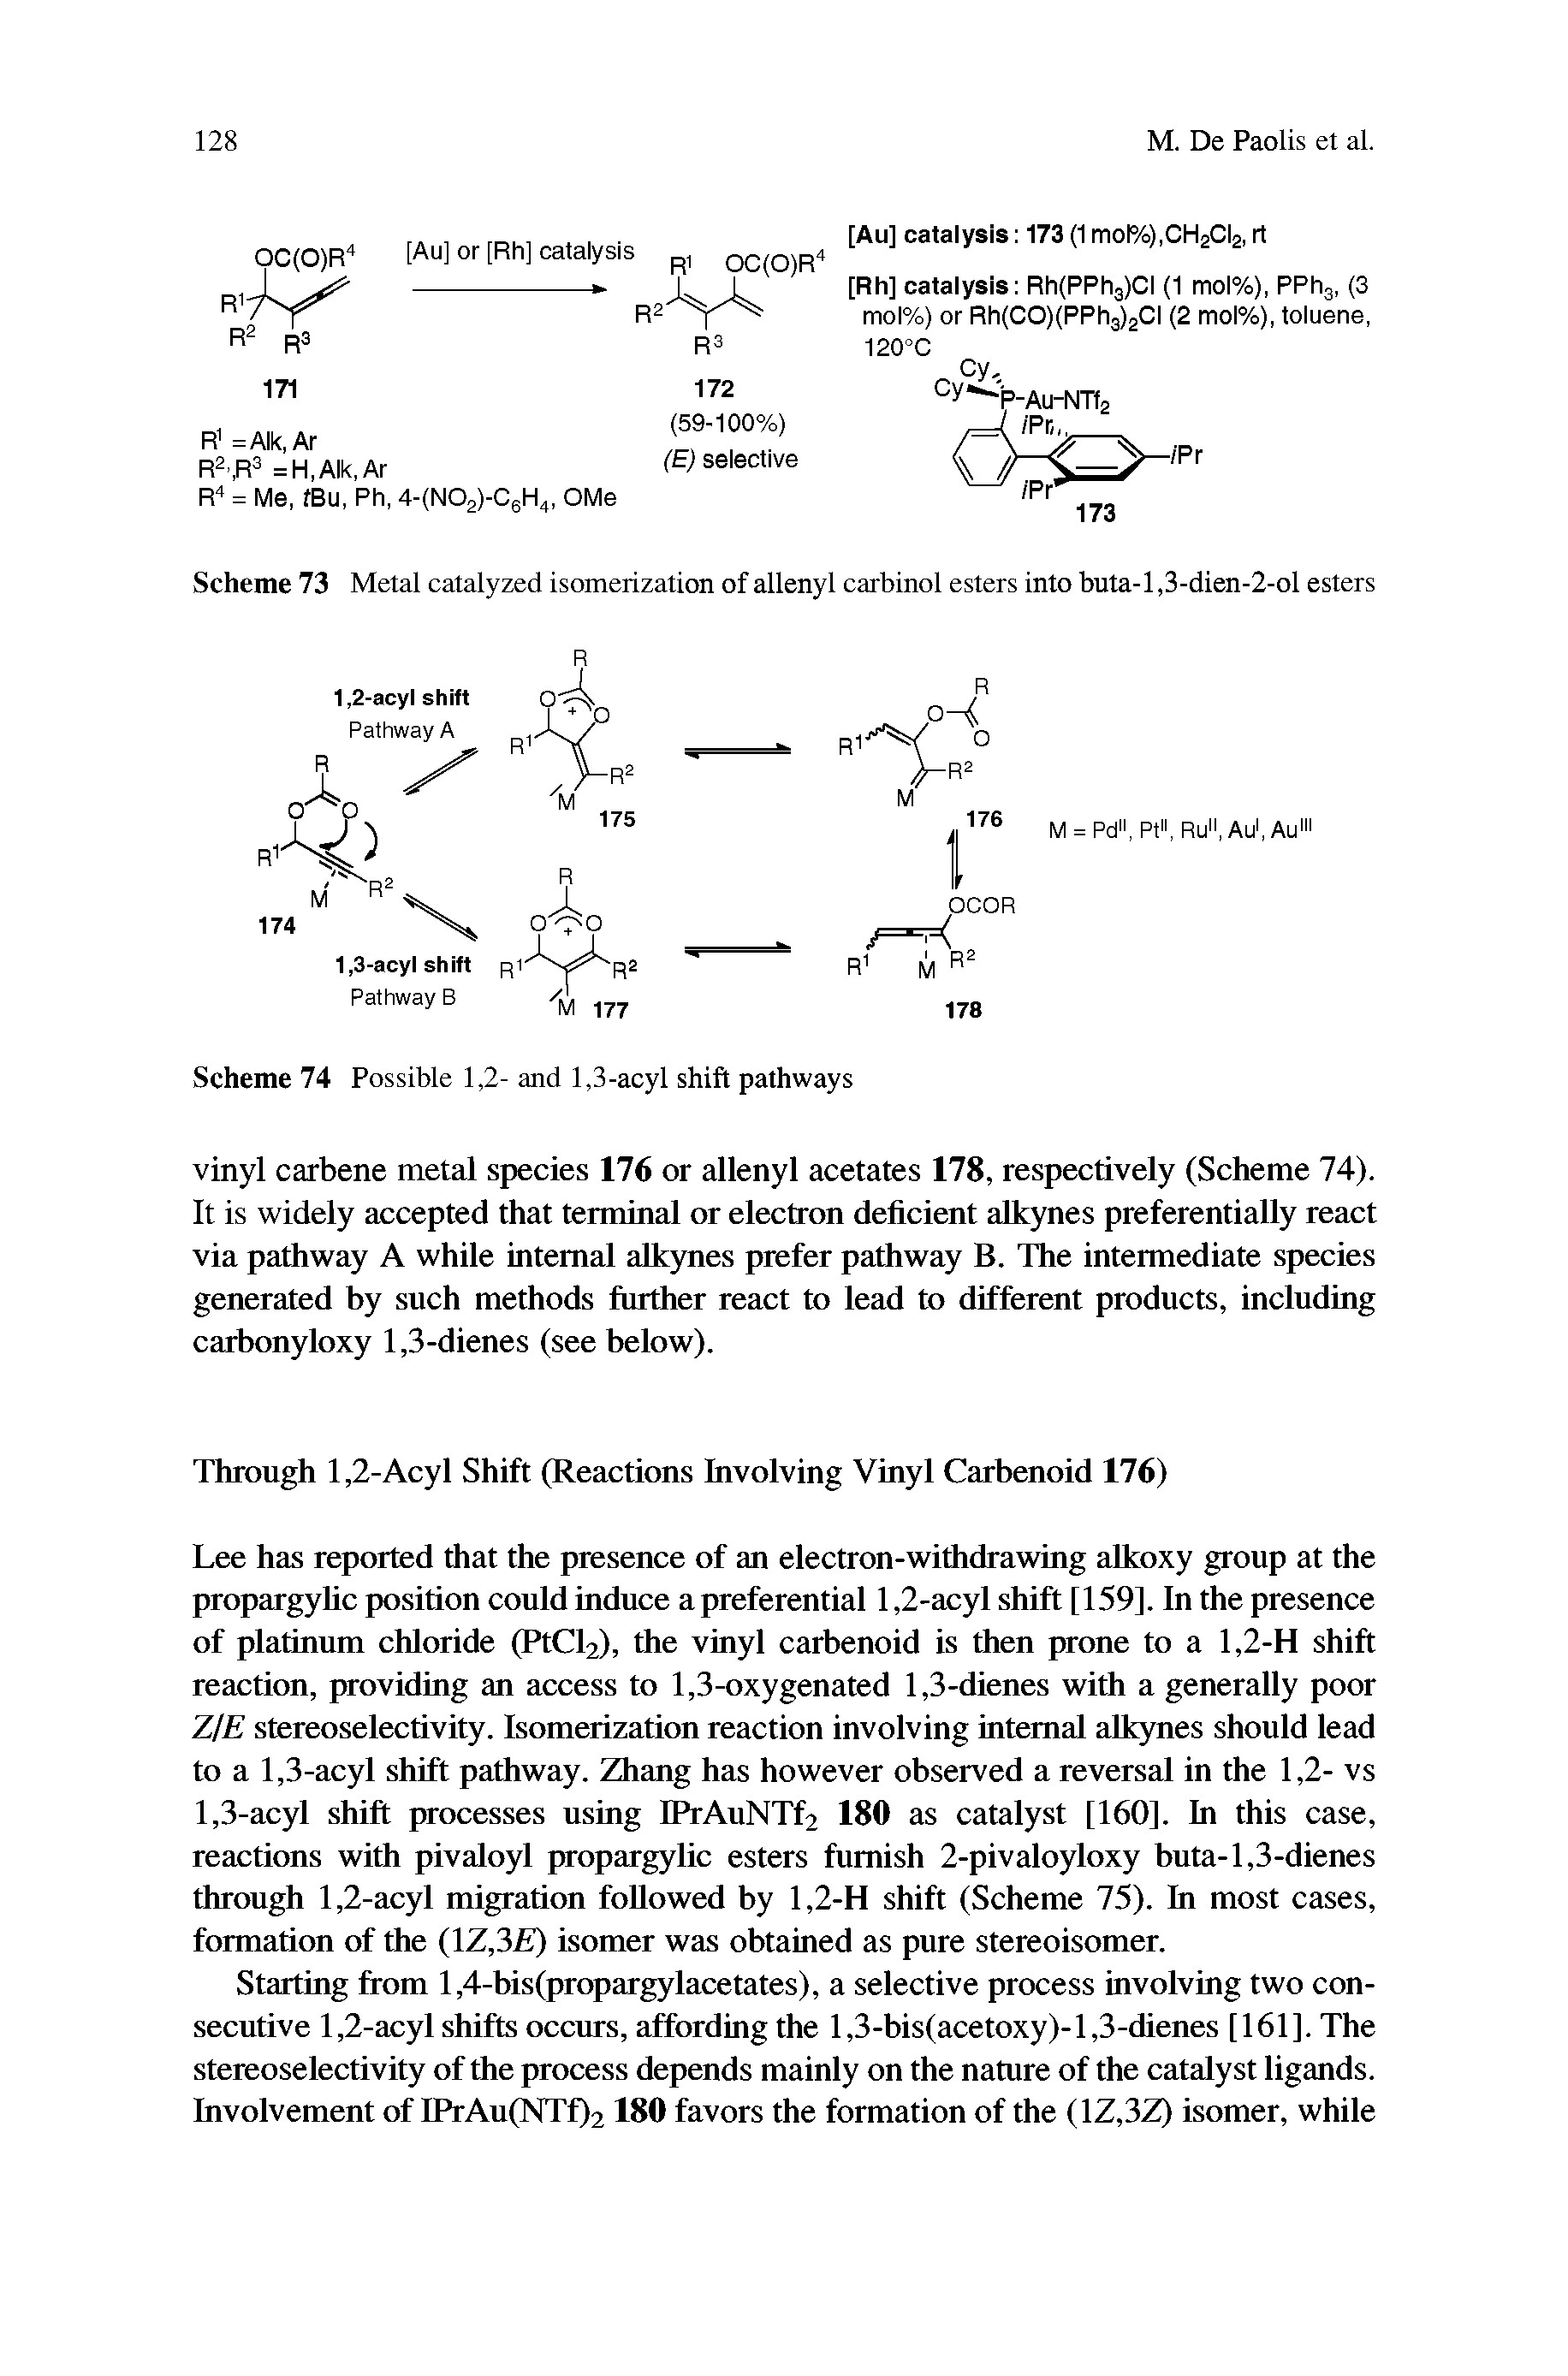 Scheme 73 Metal catalyzed isomerization of allenyl carbinol esters into buta-l,3-dien-2-ol esters...